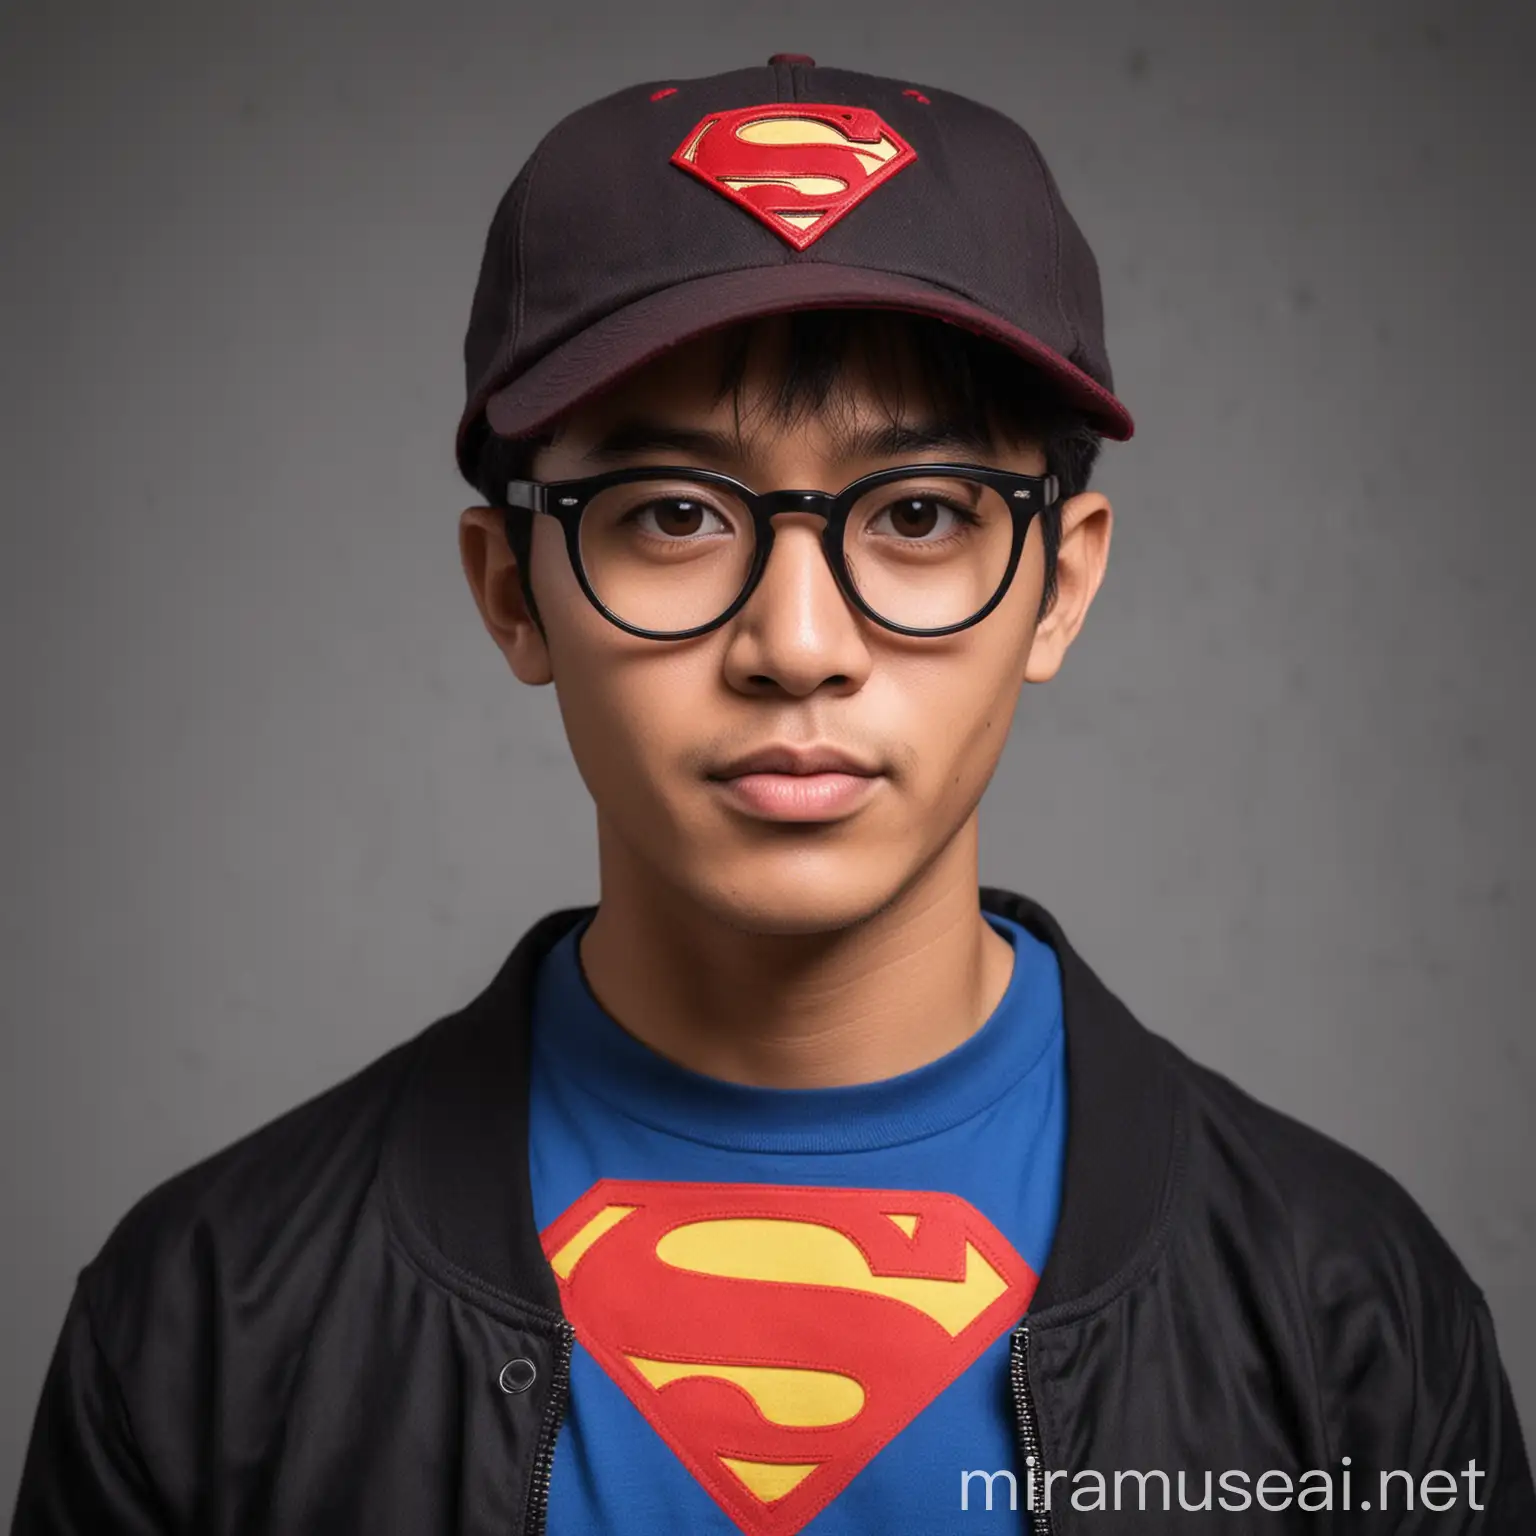 Indonesian Man in Superman Logo Baseball Cap and Glasses